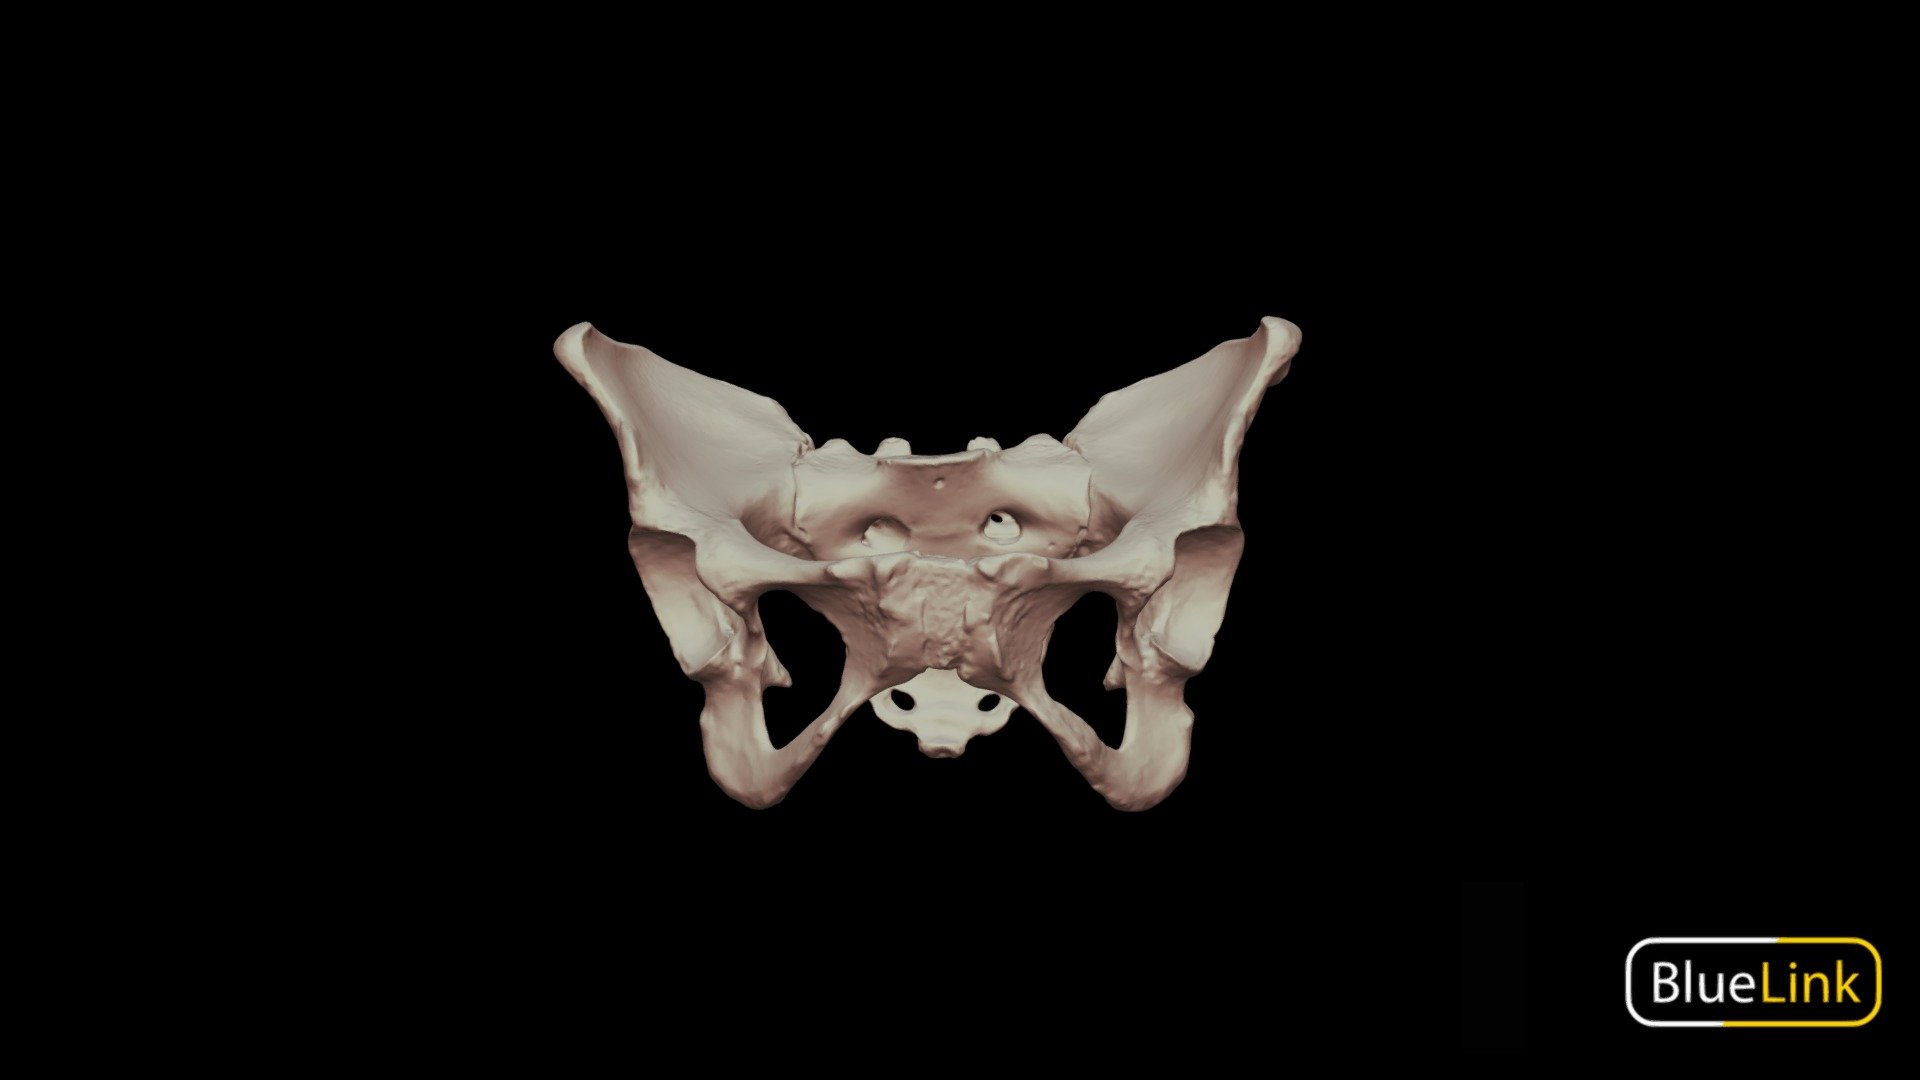 The Pelvic Girdle of Human Hip Bone Anatomy Vector Illustration 538244  Vector Art at Vecteezy